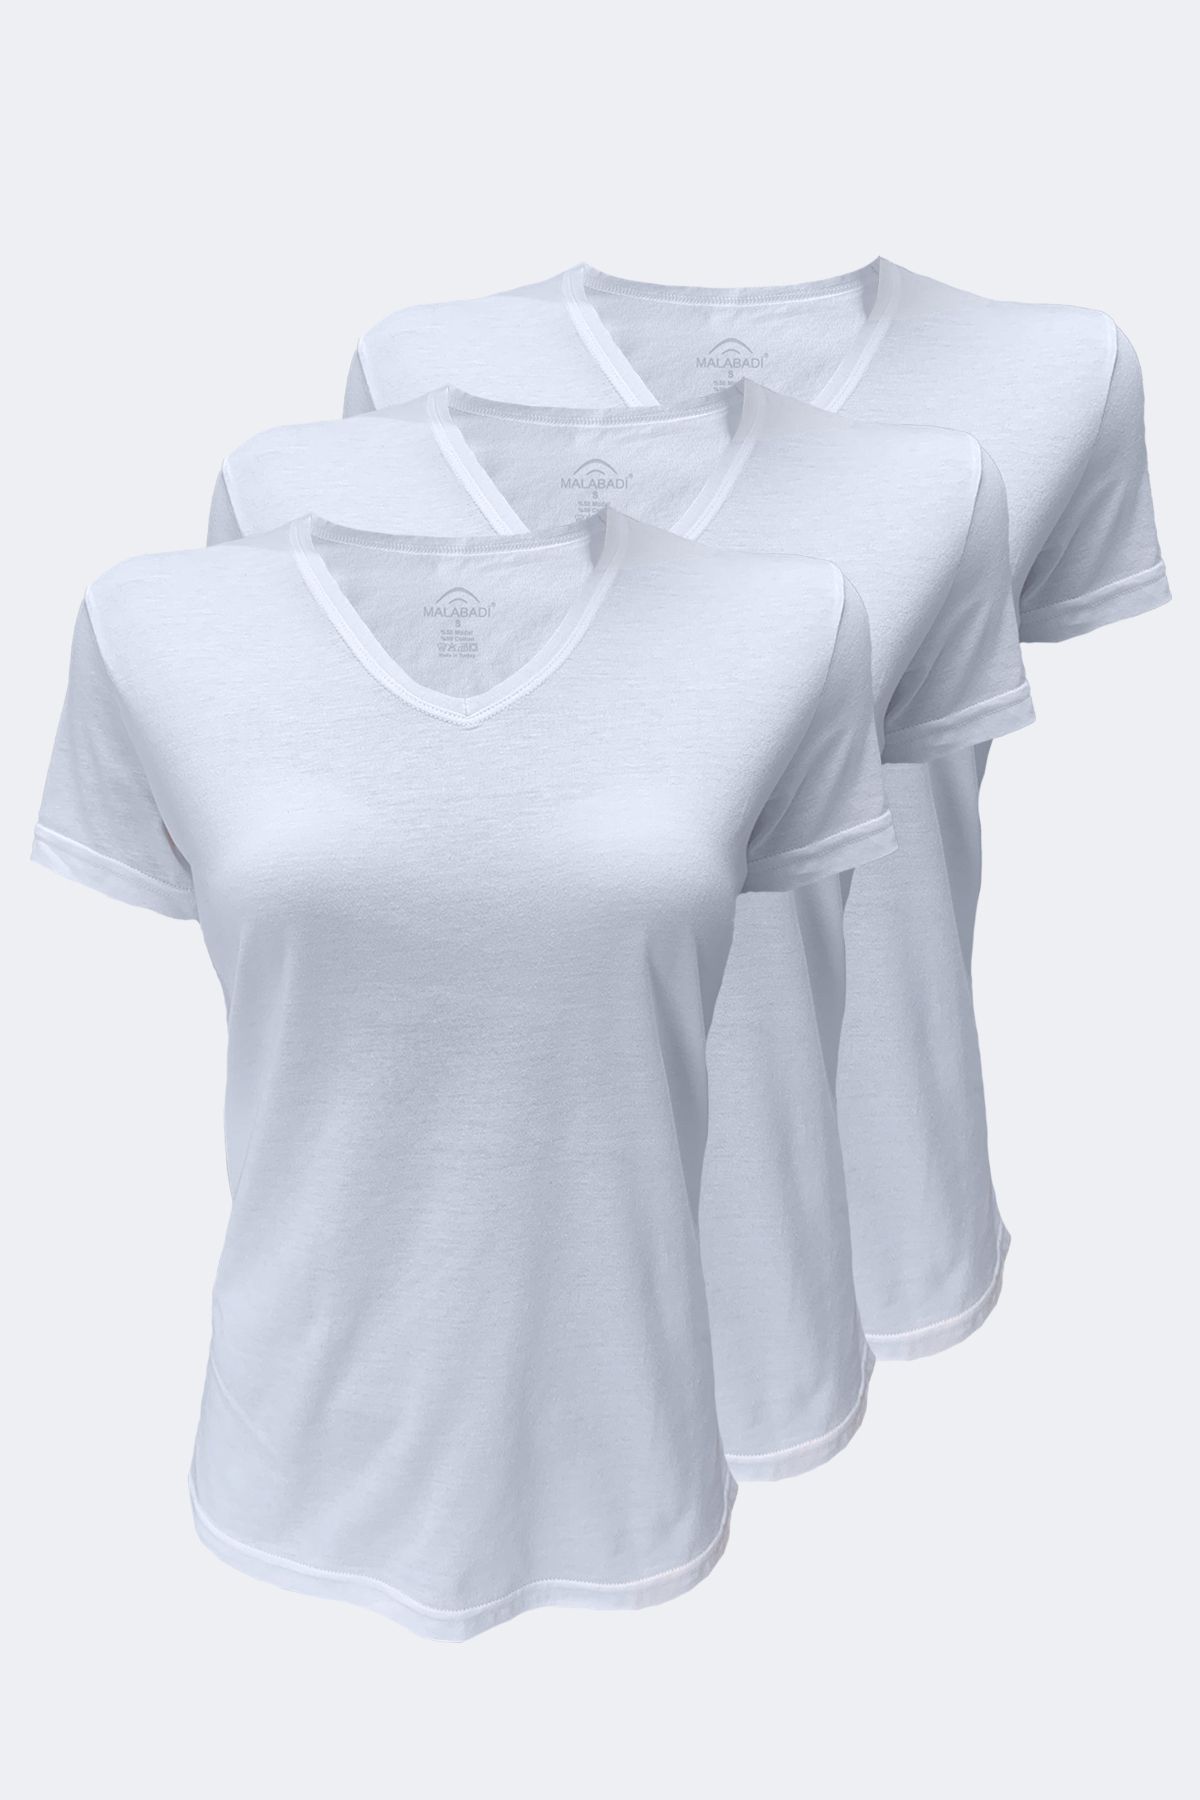 Malabadi Kadın Beyaz 3 Lü Paket Basic V Yaka Ince Modal T-shirt 3m7051